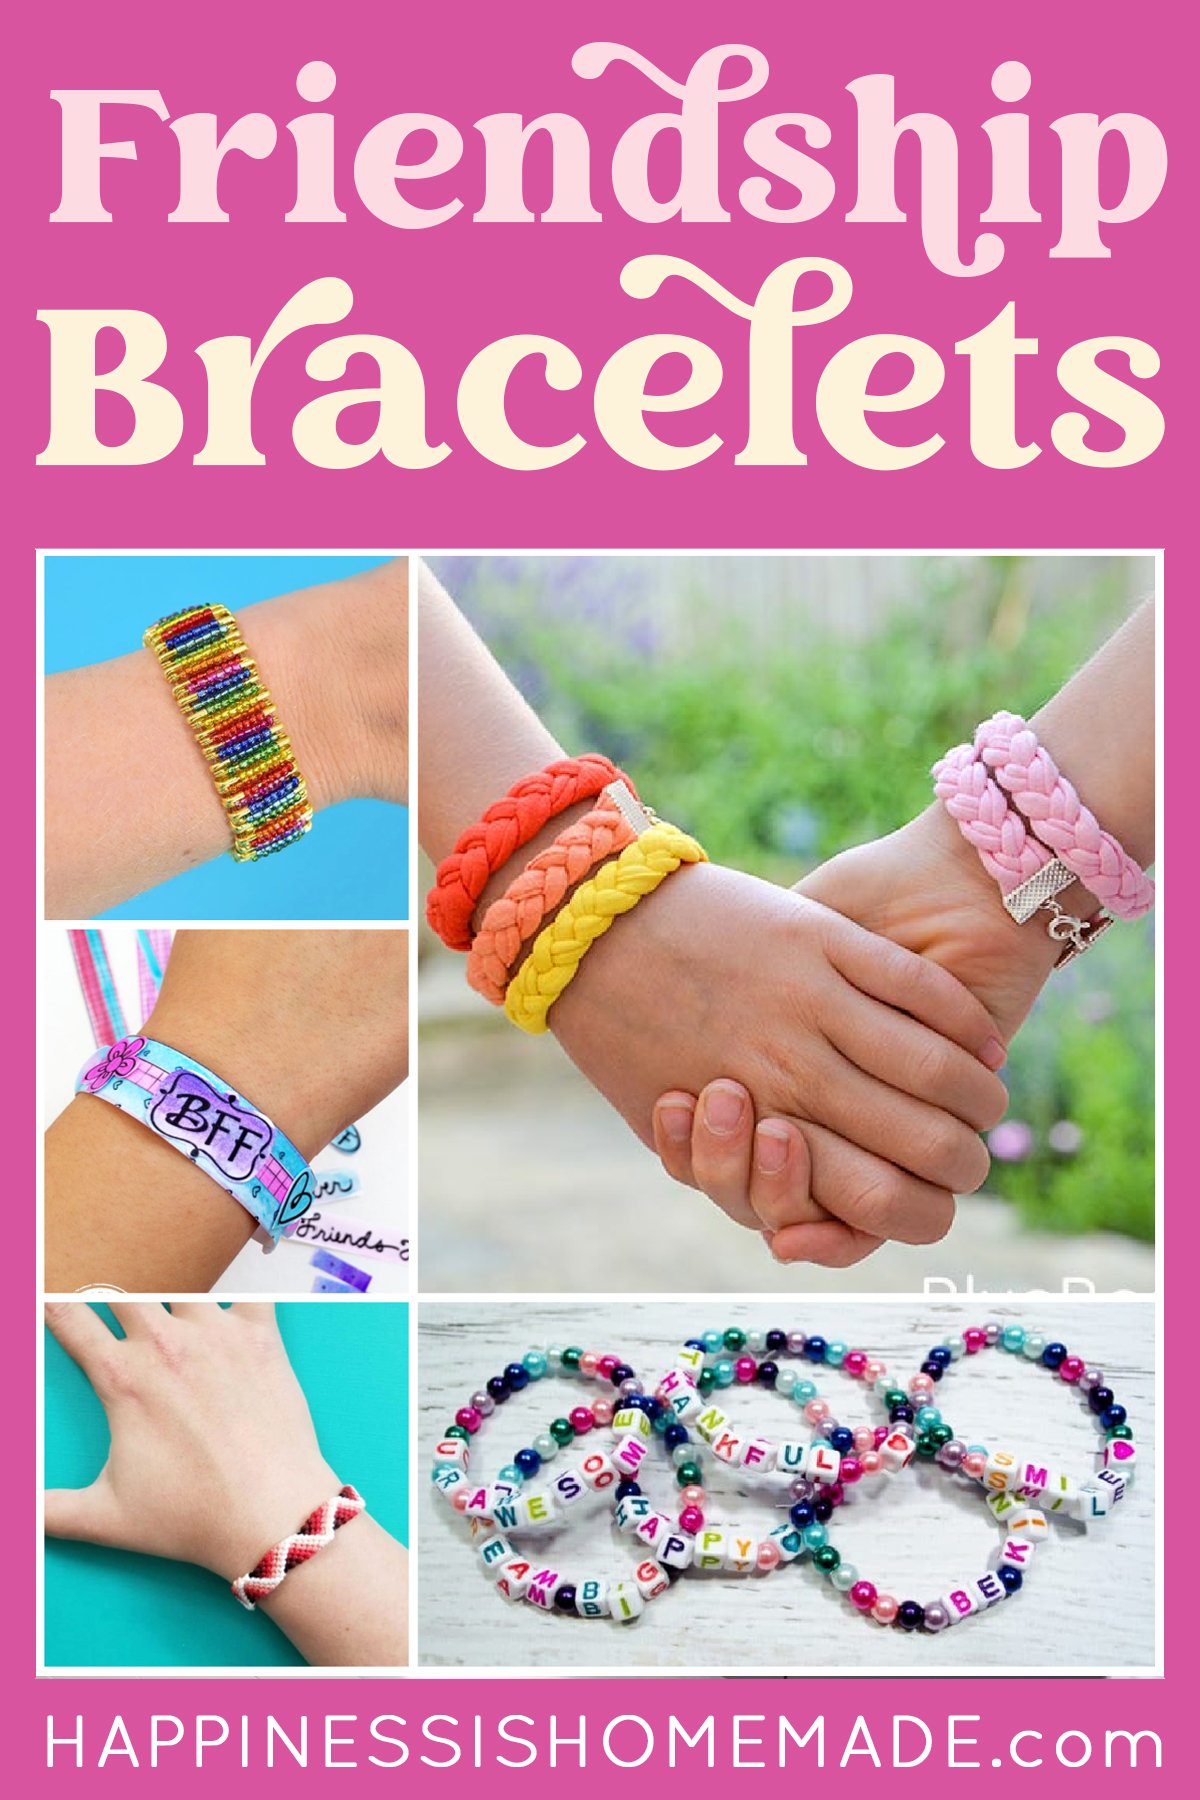 Klutz Friendship Bracelets by Laura Torres | eBay